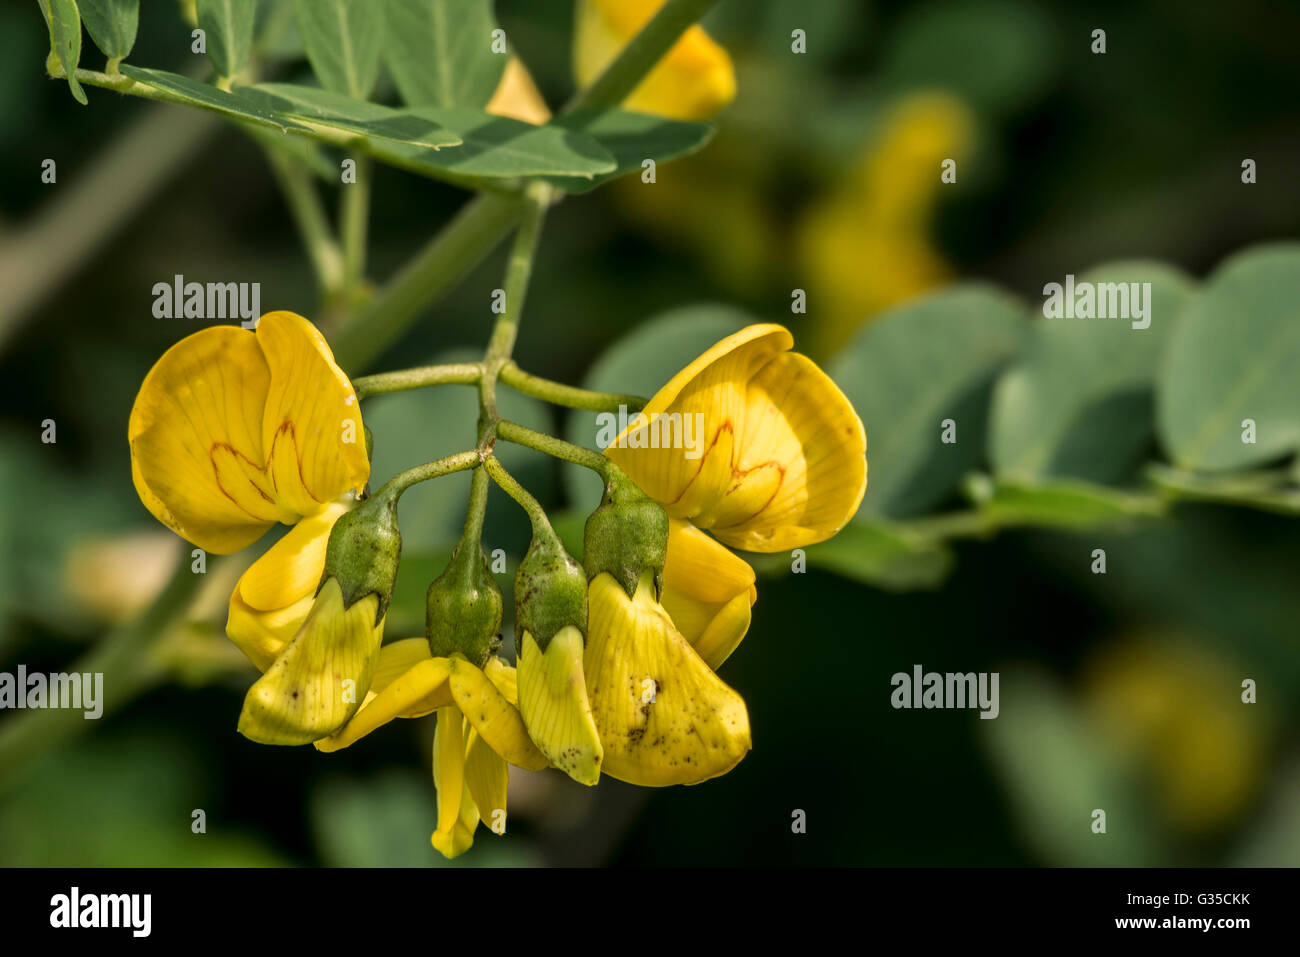 Bladder-senna (Colutea arborescens), leguminous shrub in flower Stock Photo